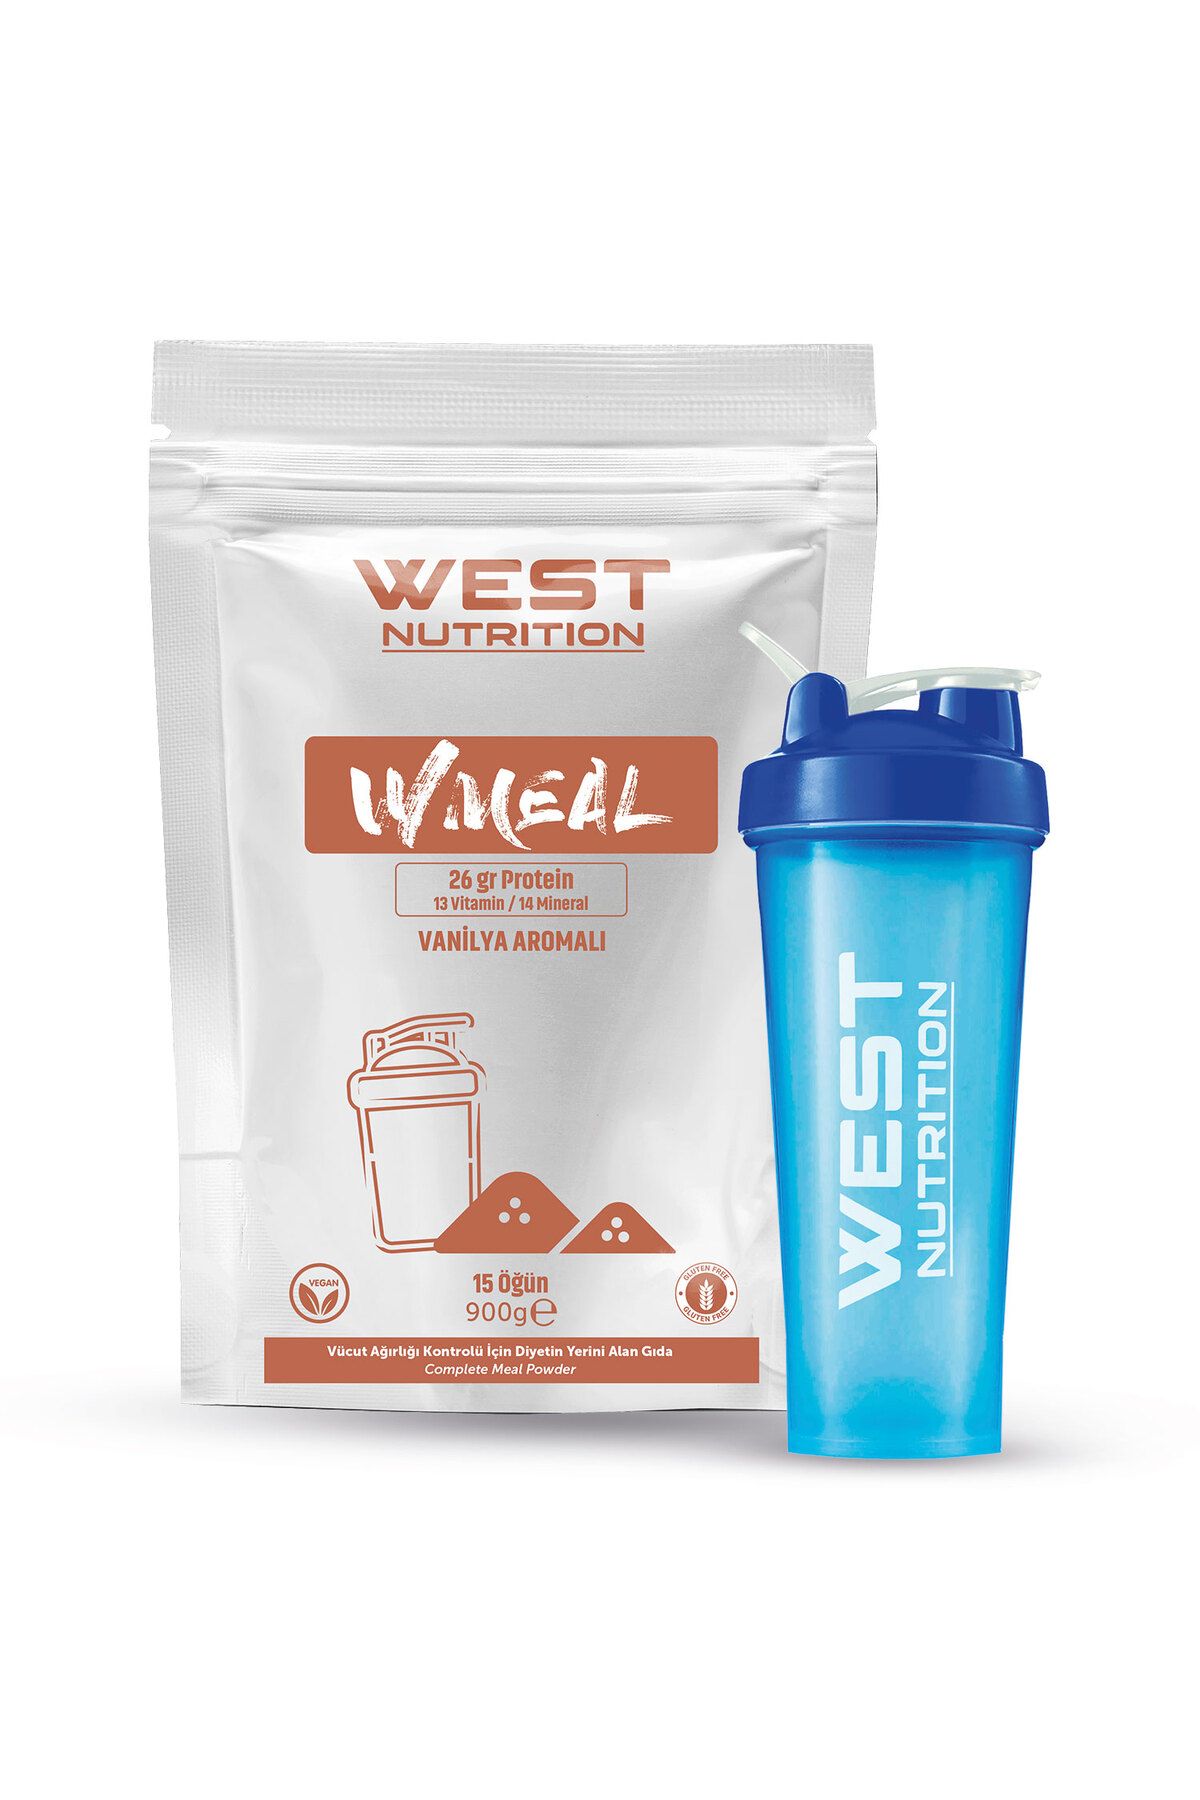 West Nutrition WMeal Proteinli Öğün Tozu 15 Öğün 900 gr Vanilya